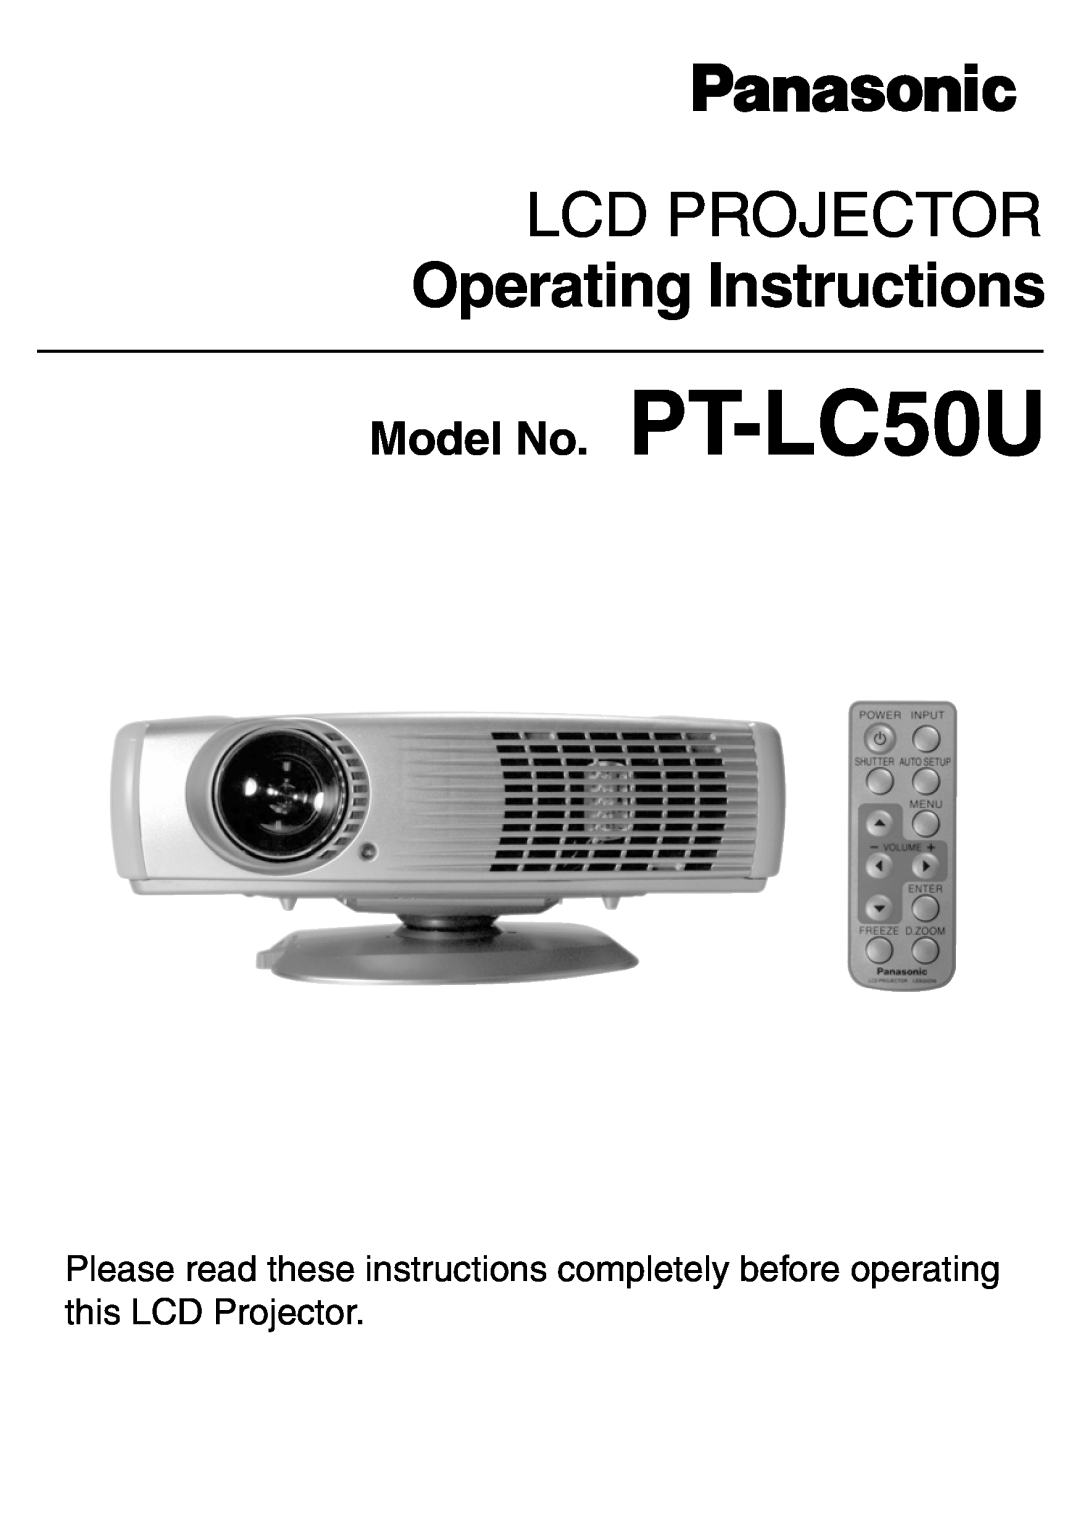 Panasonic manual Operating Instructions, Model No. PT-LC50U, Lcd Projector 